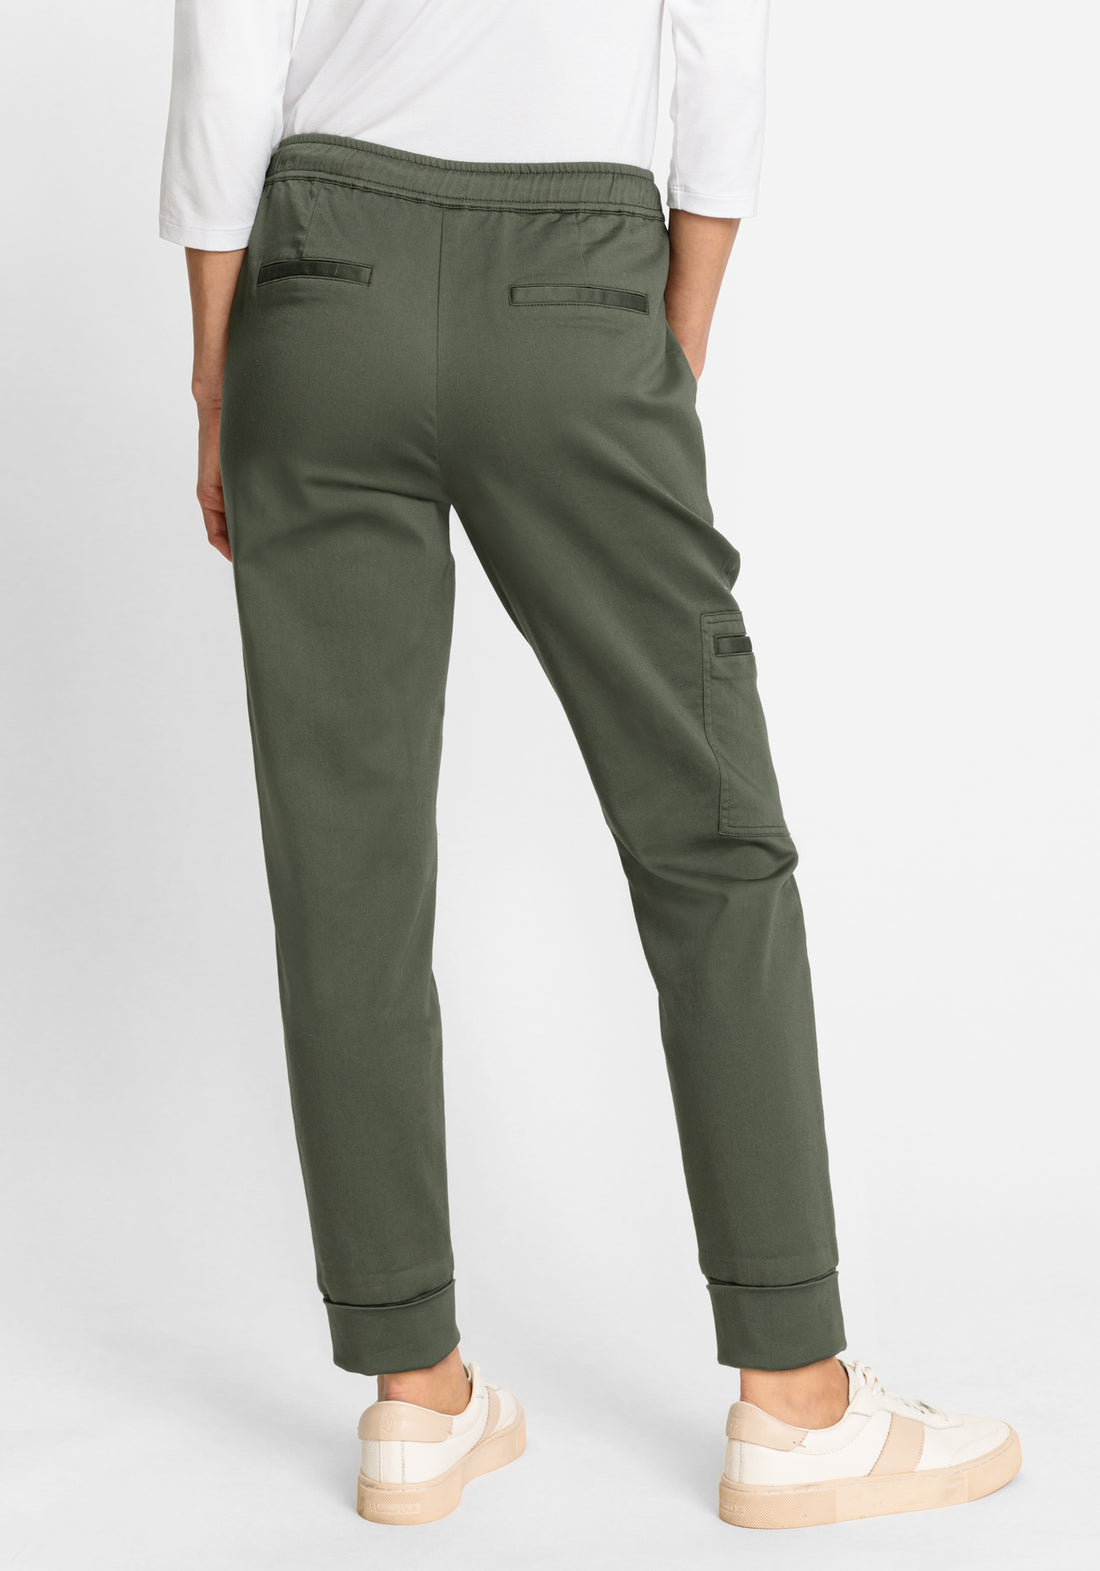 Olsen - Olive Cargo Pants